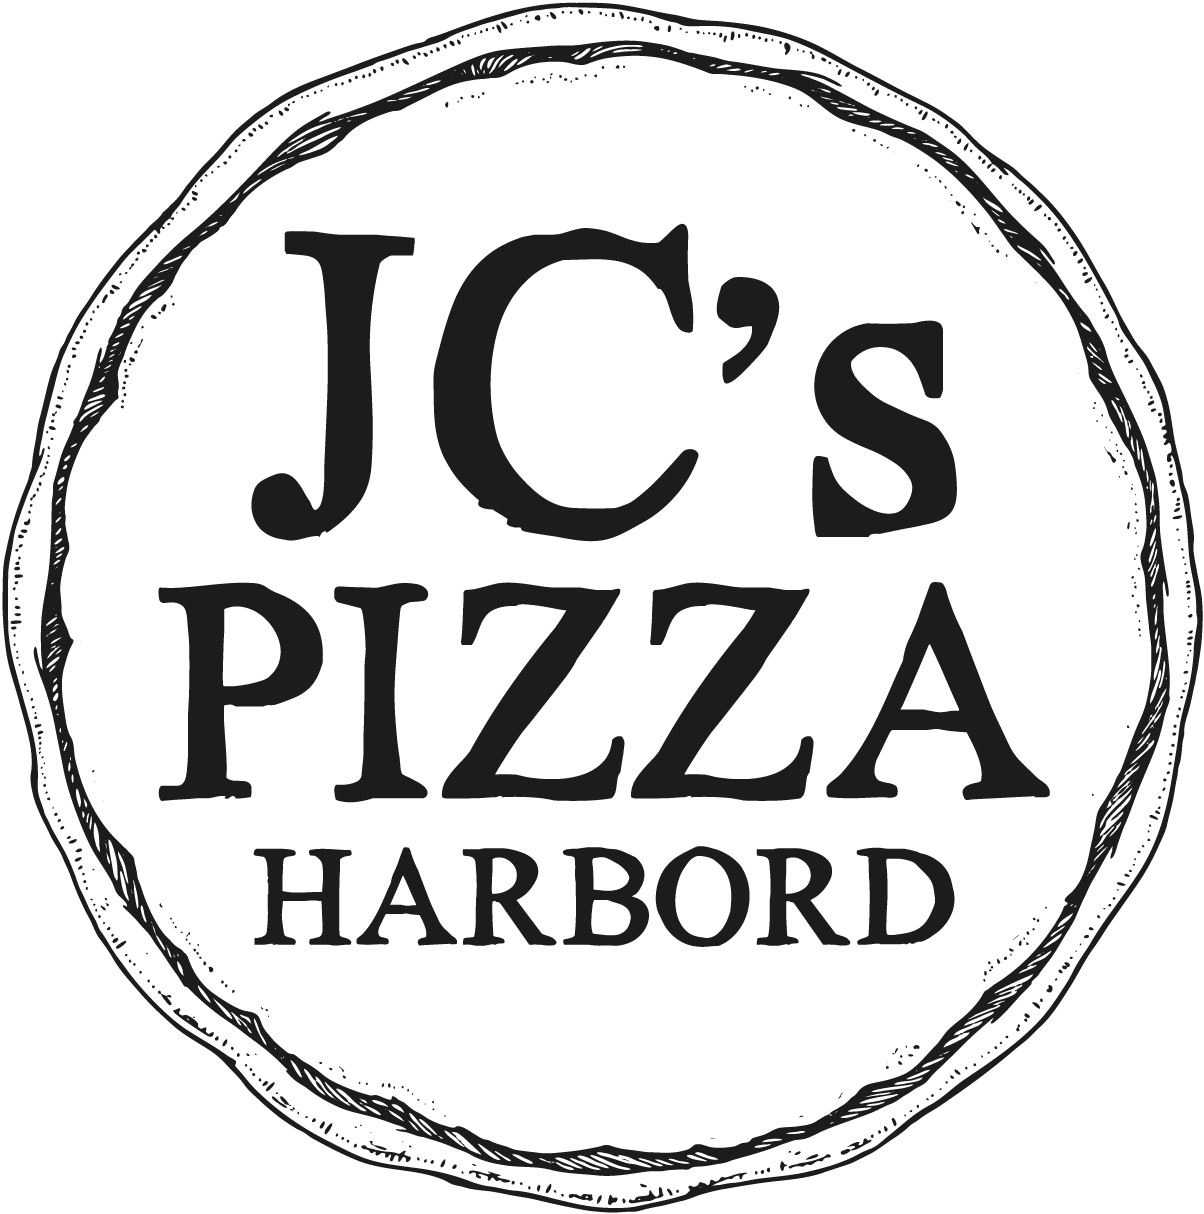 JC’s Pizza Harbord